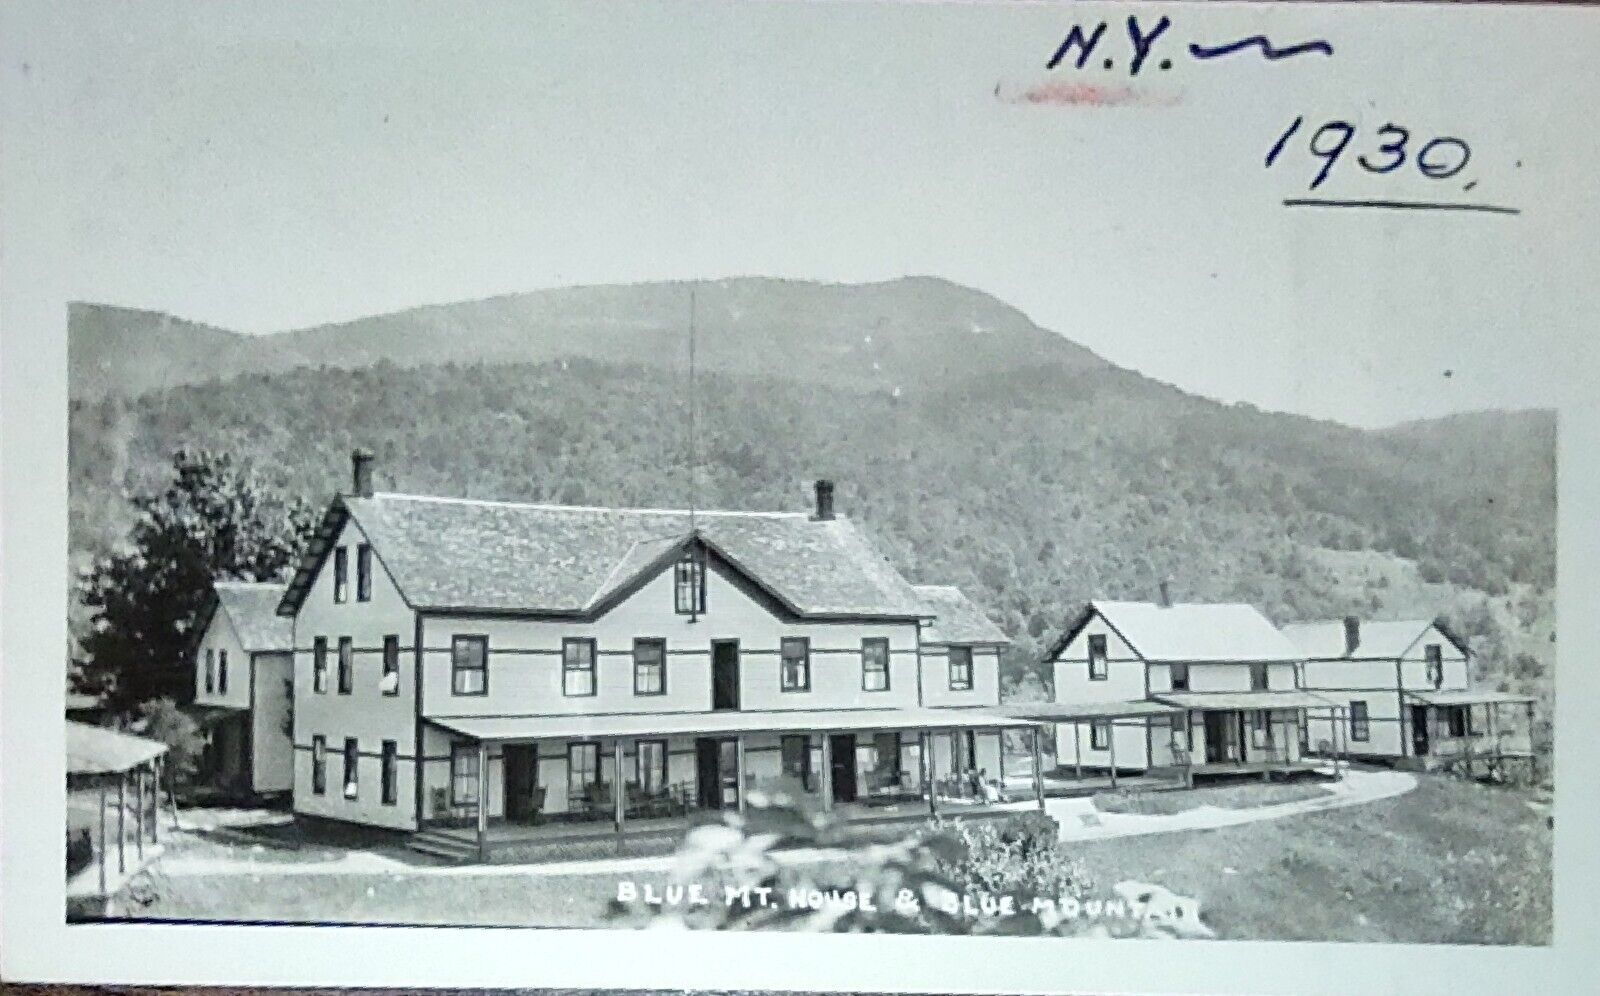 RPPC BLUE MOUNTAIN HOUSE & THE BLUE MOUNTAINS.  CANTON N.Y. PHOTO POSTCARD. 1930